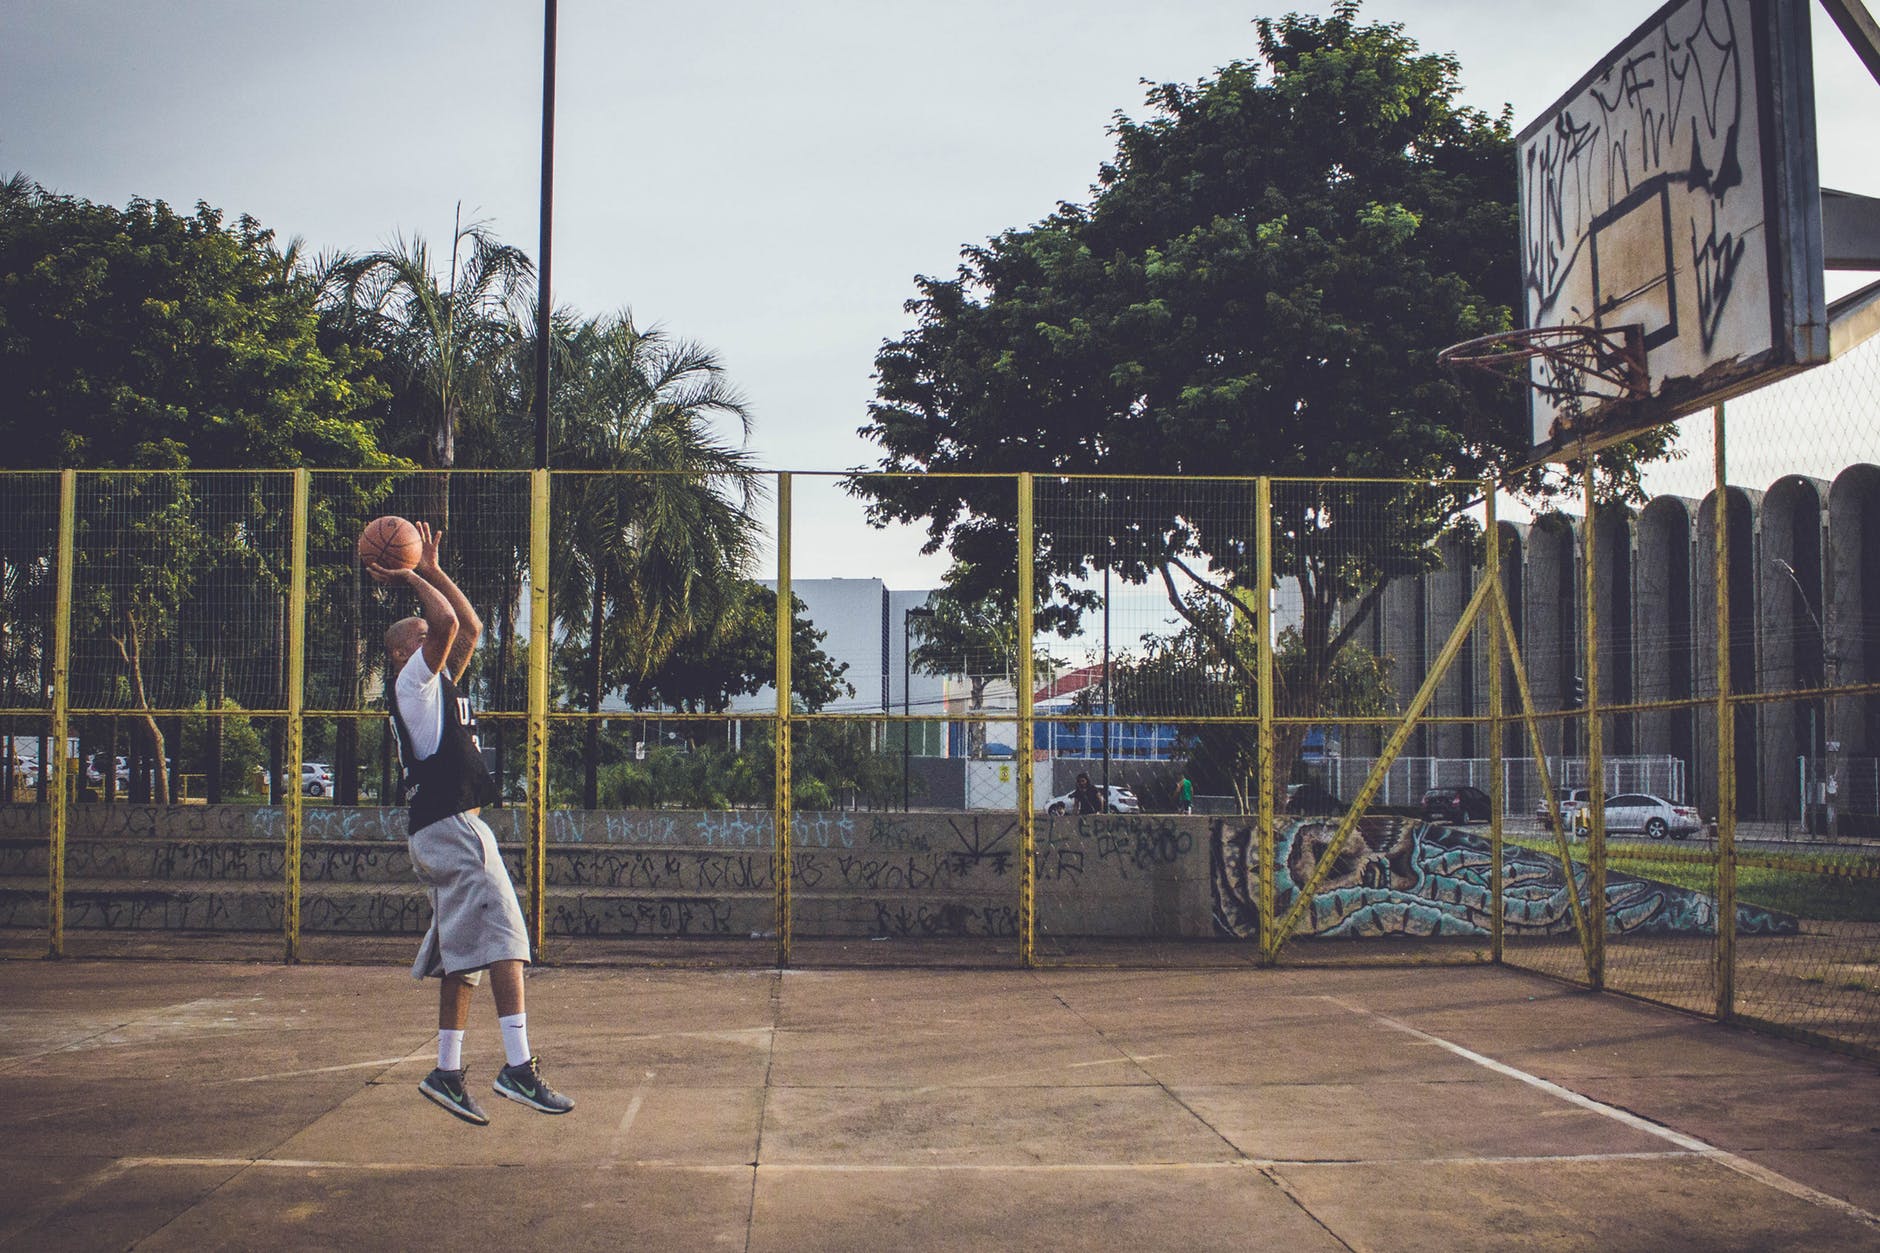 Play Basketball - Basketball Player Jumping with the Ball